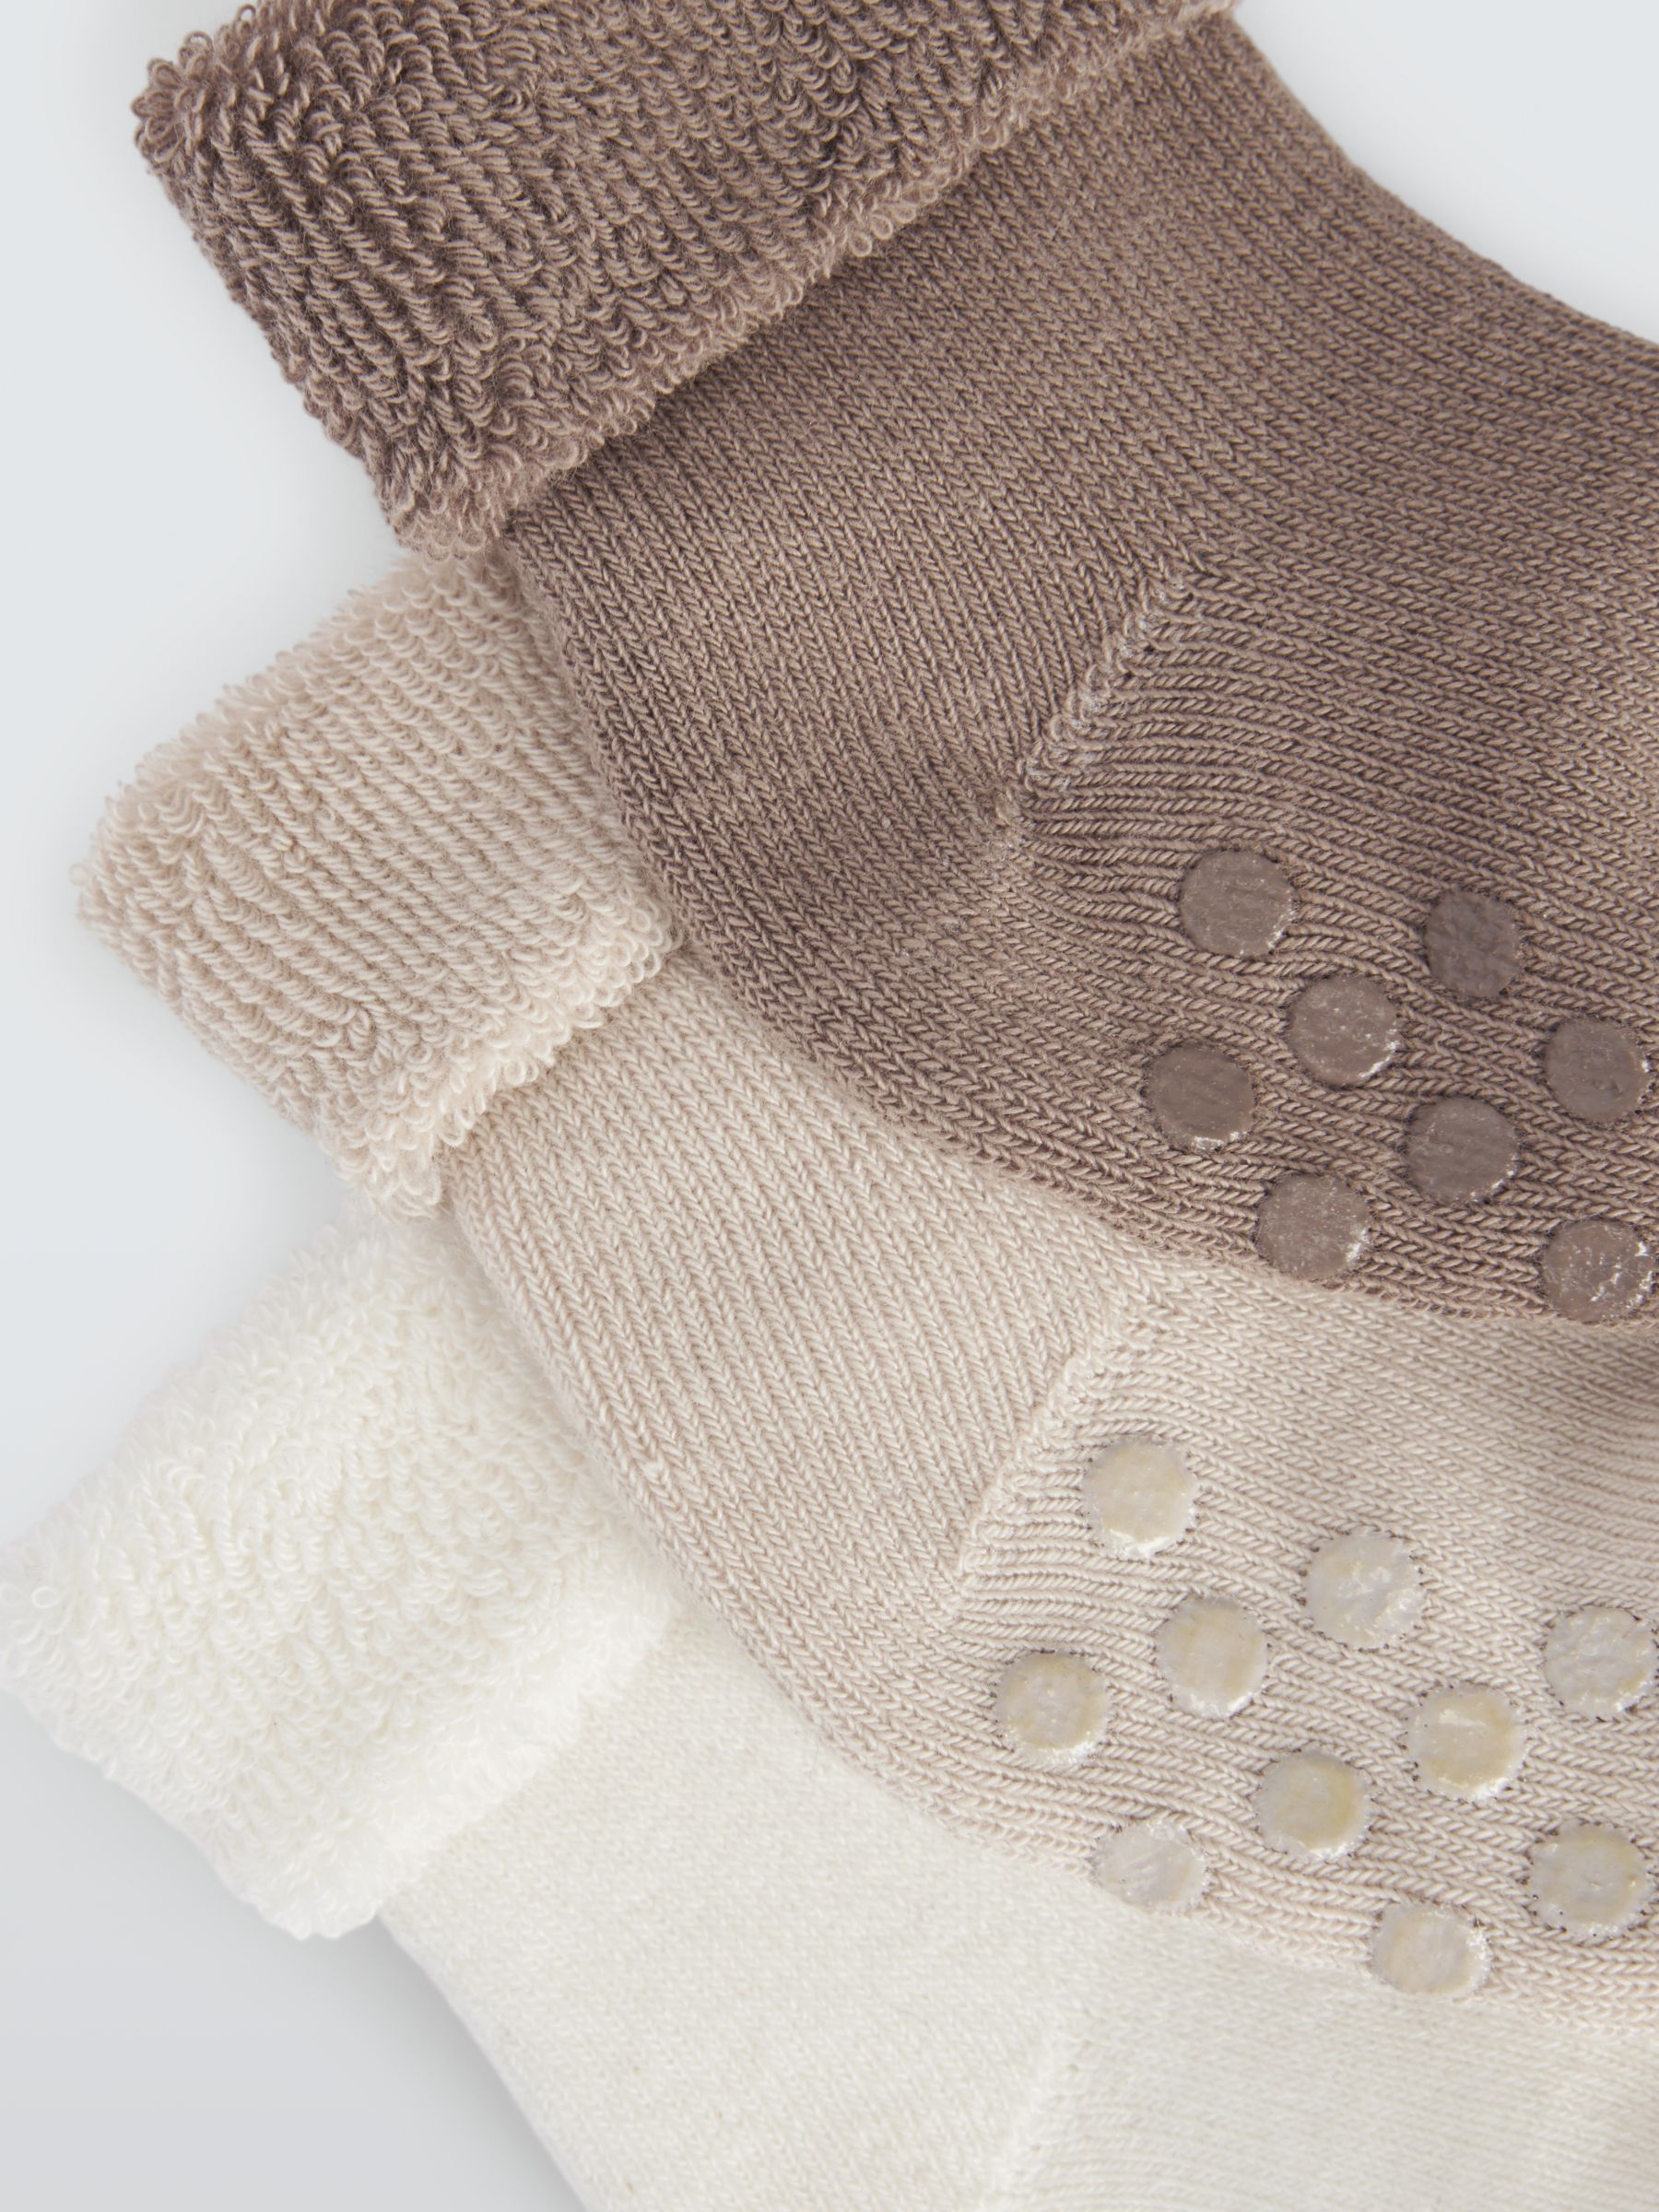 John Lewis Baby Organic Cotton Blend Socks, Pack of 3, Neutrals, 6-12 months